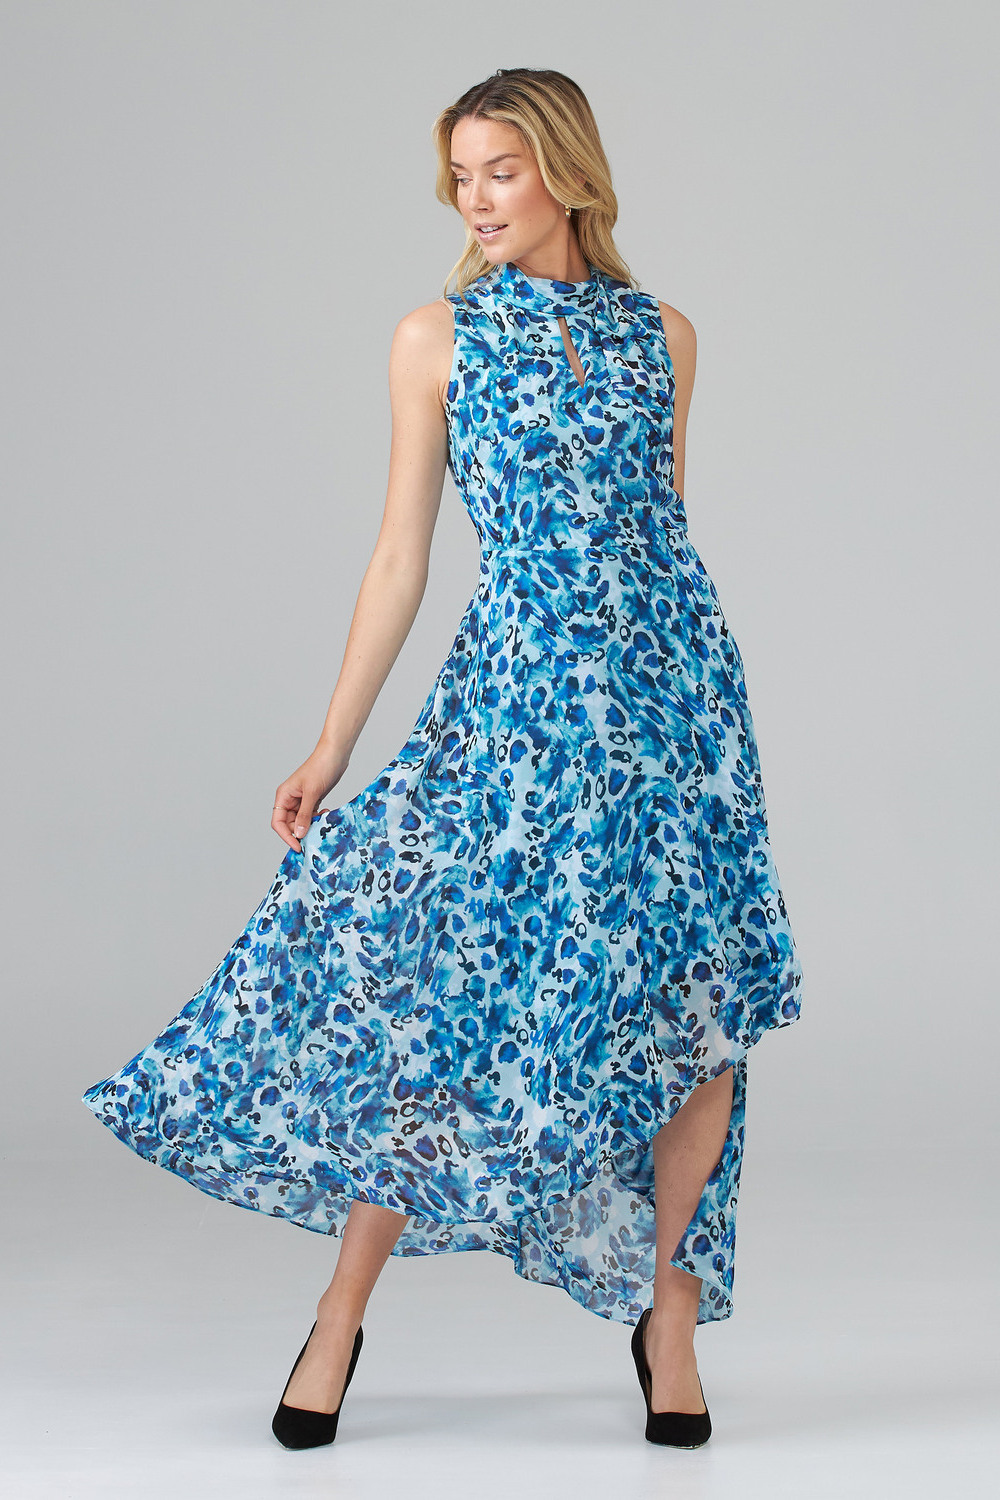 Joseph Ribkoff Dress Style 202121. Blue/multi